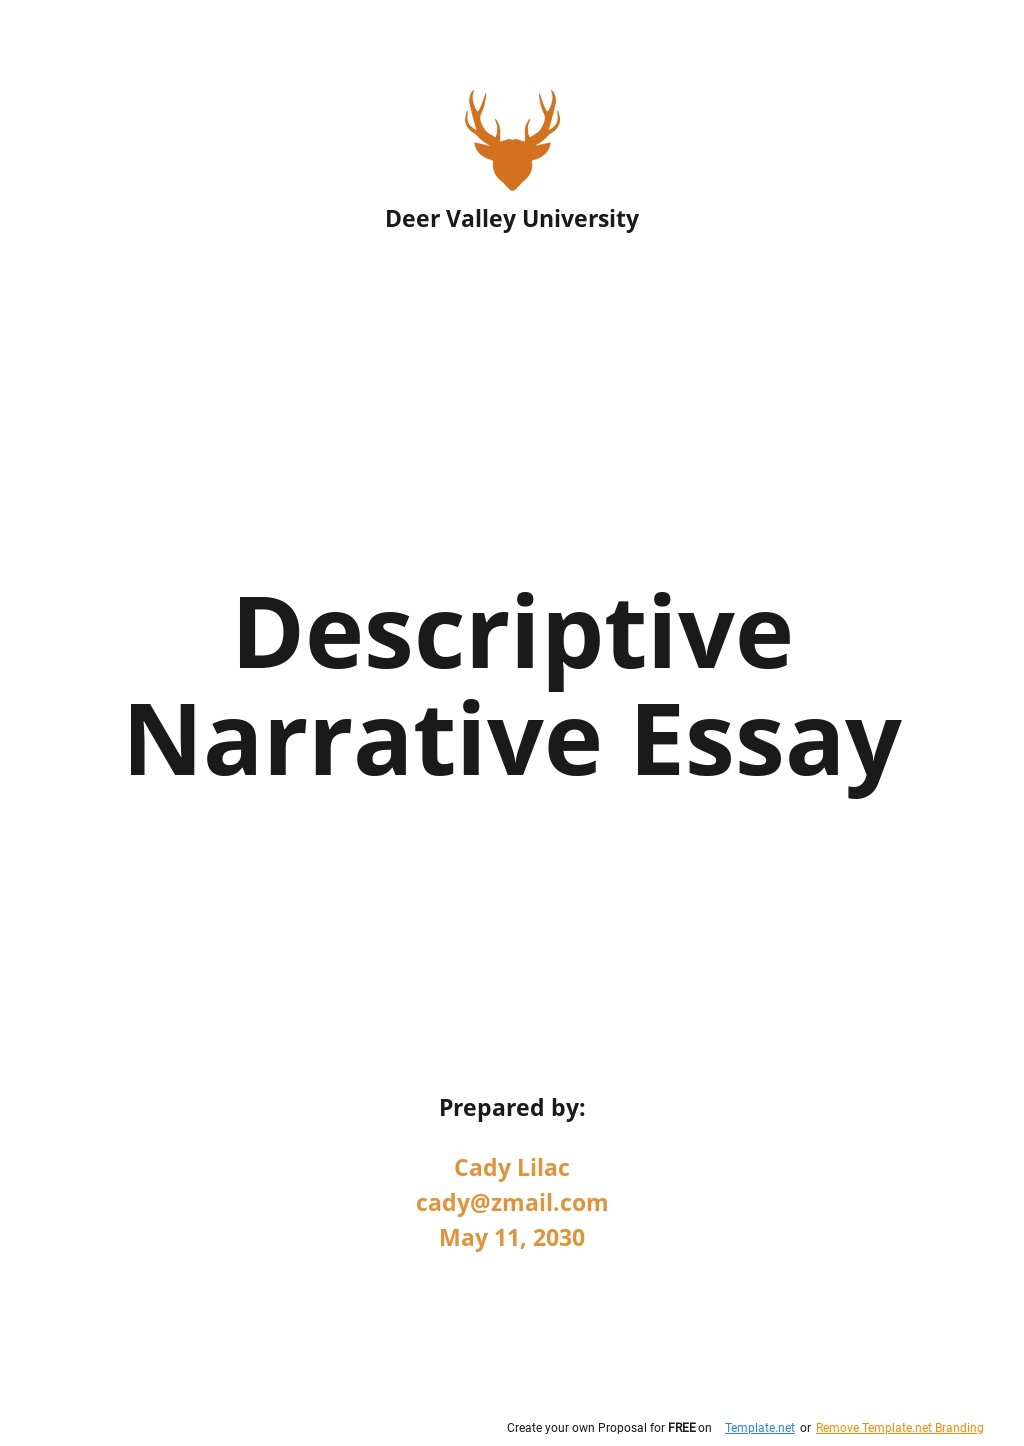 Descriptive Narrative Essay Template in Word, Google Docs, Apple Pages